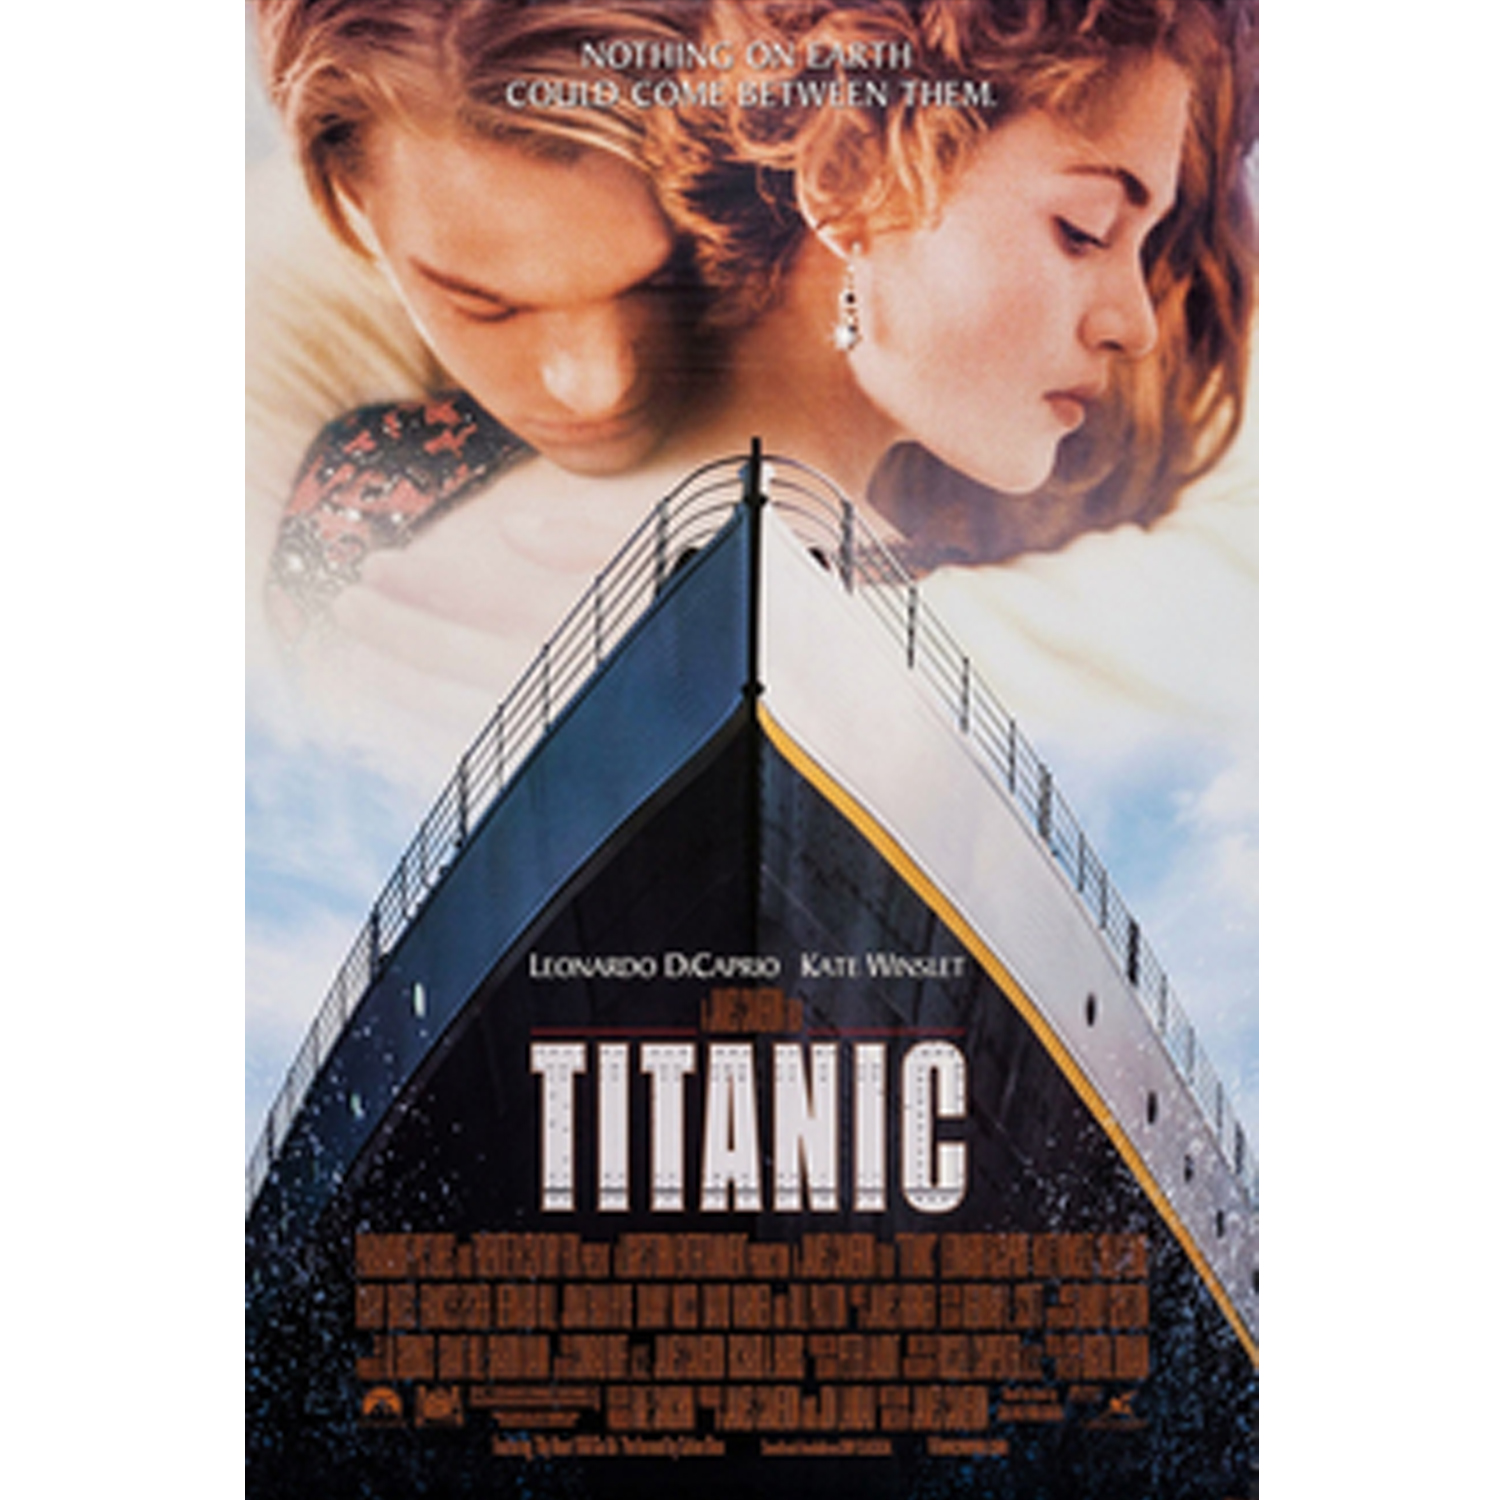 Titanic (1997) - Leonardo DiCaprio & Kate Winslet